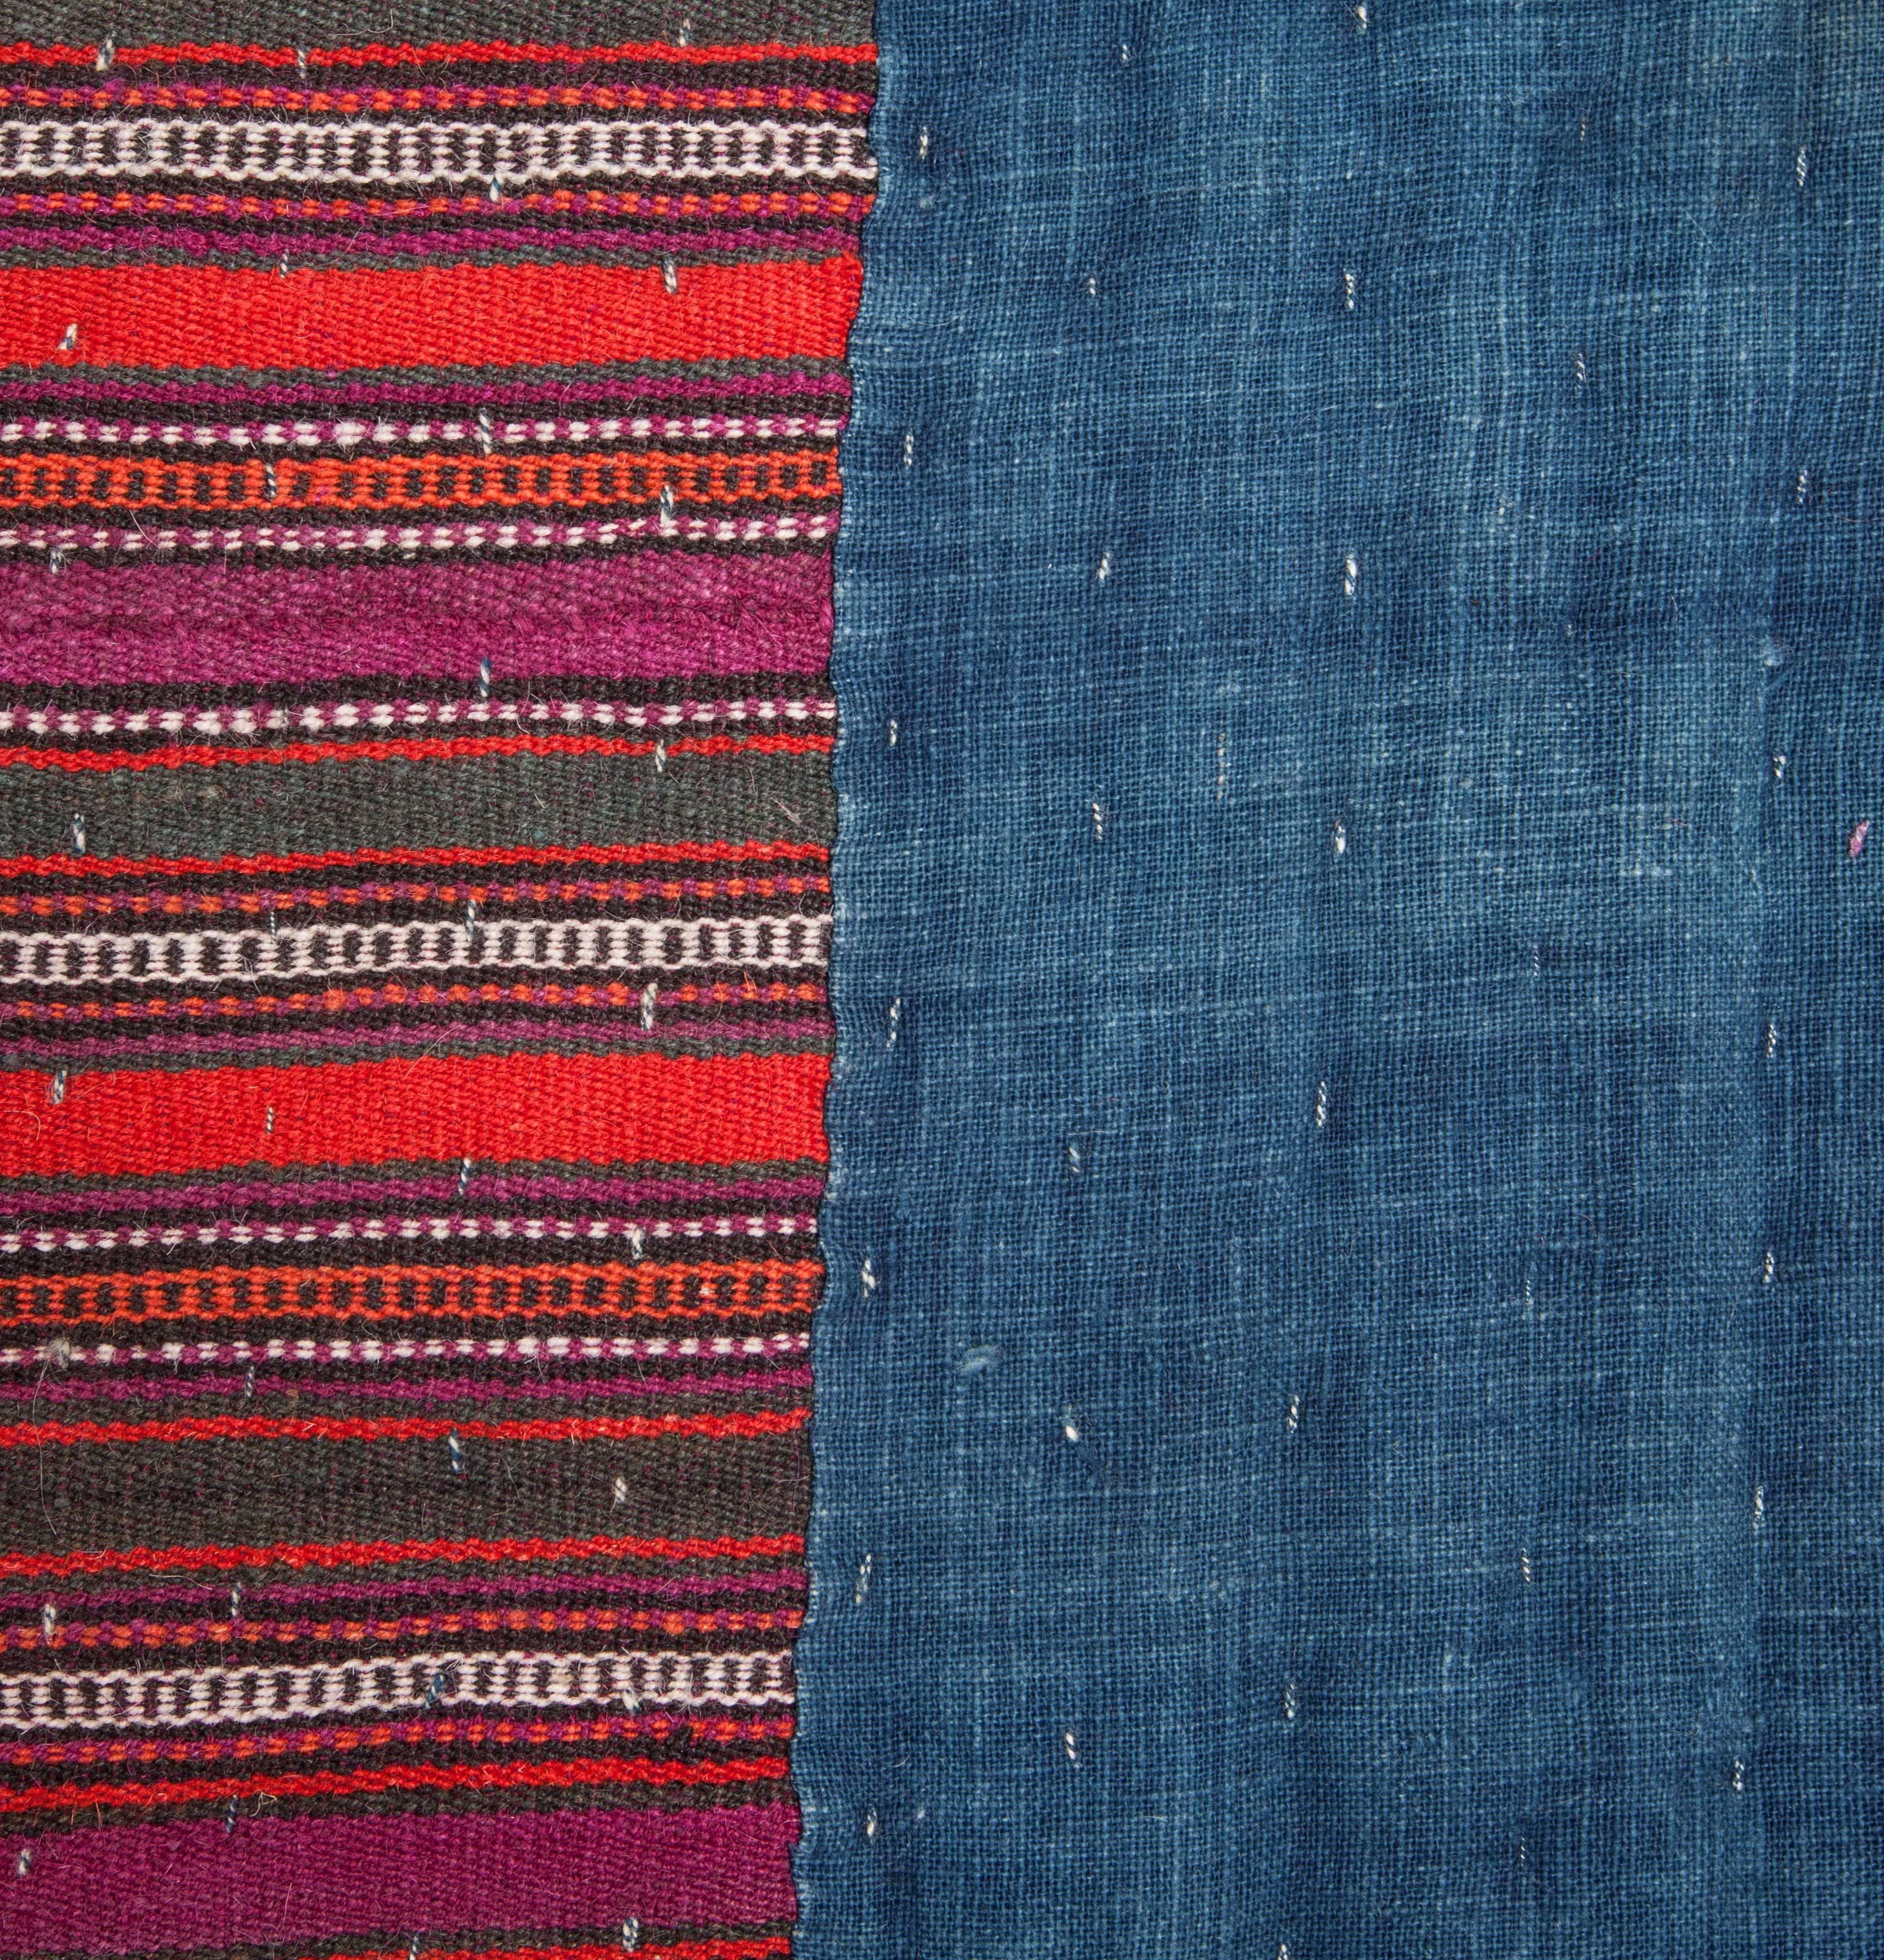 Woven Early 20th Century, Indigo Persian Blanket